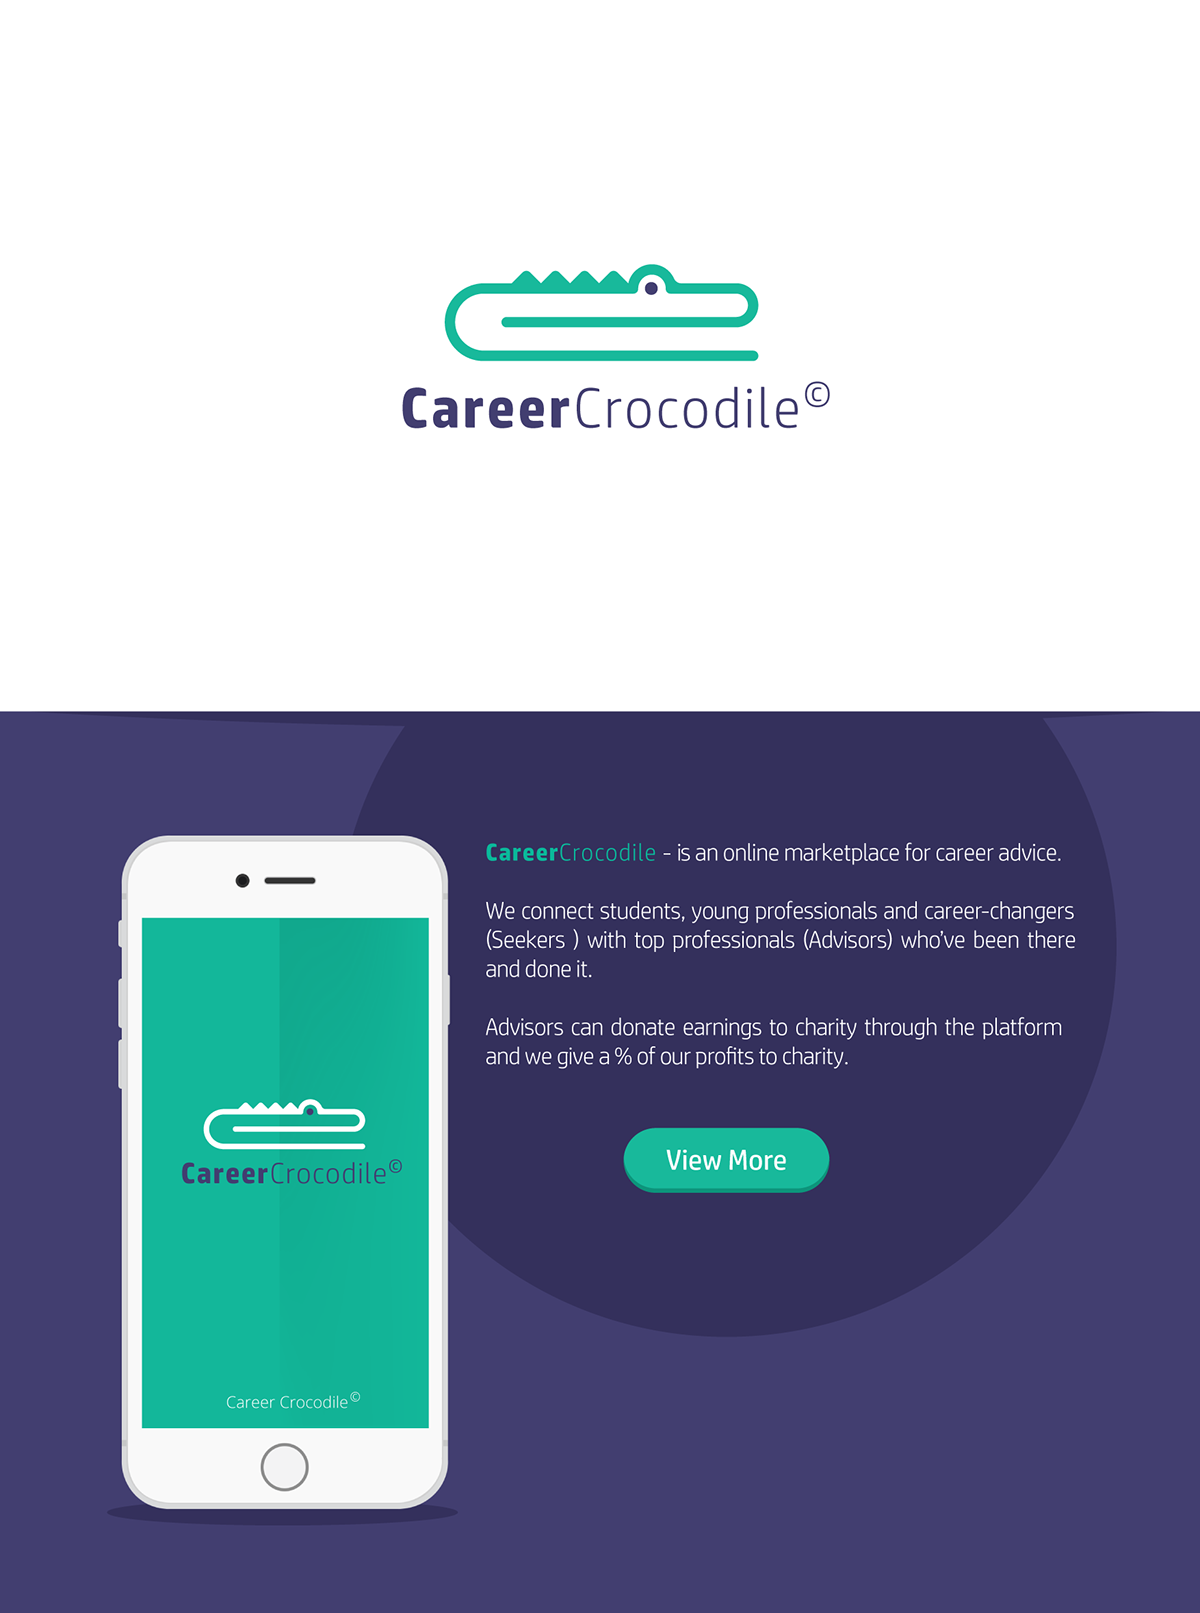 Logo Design brand career crocodile Crocodyle Alegator clip Office business Advisor turquoise green